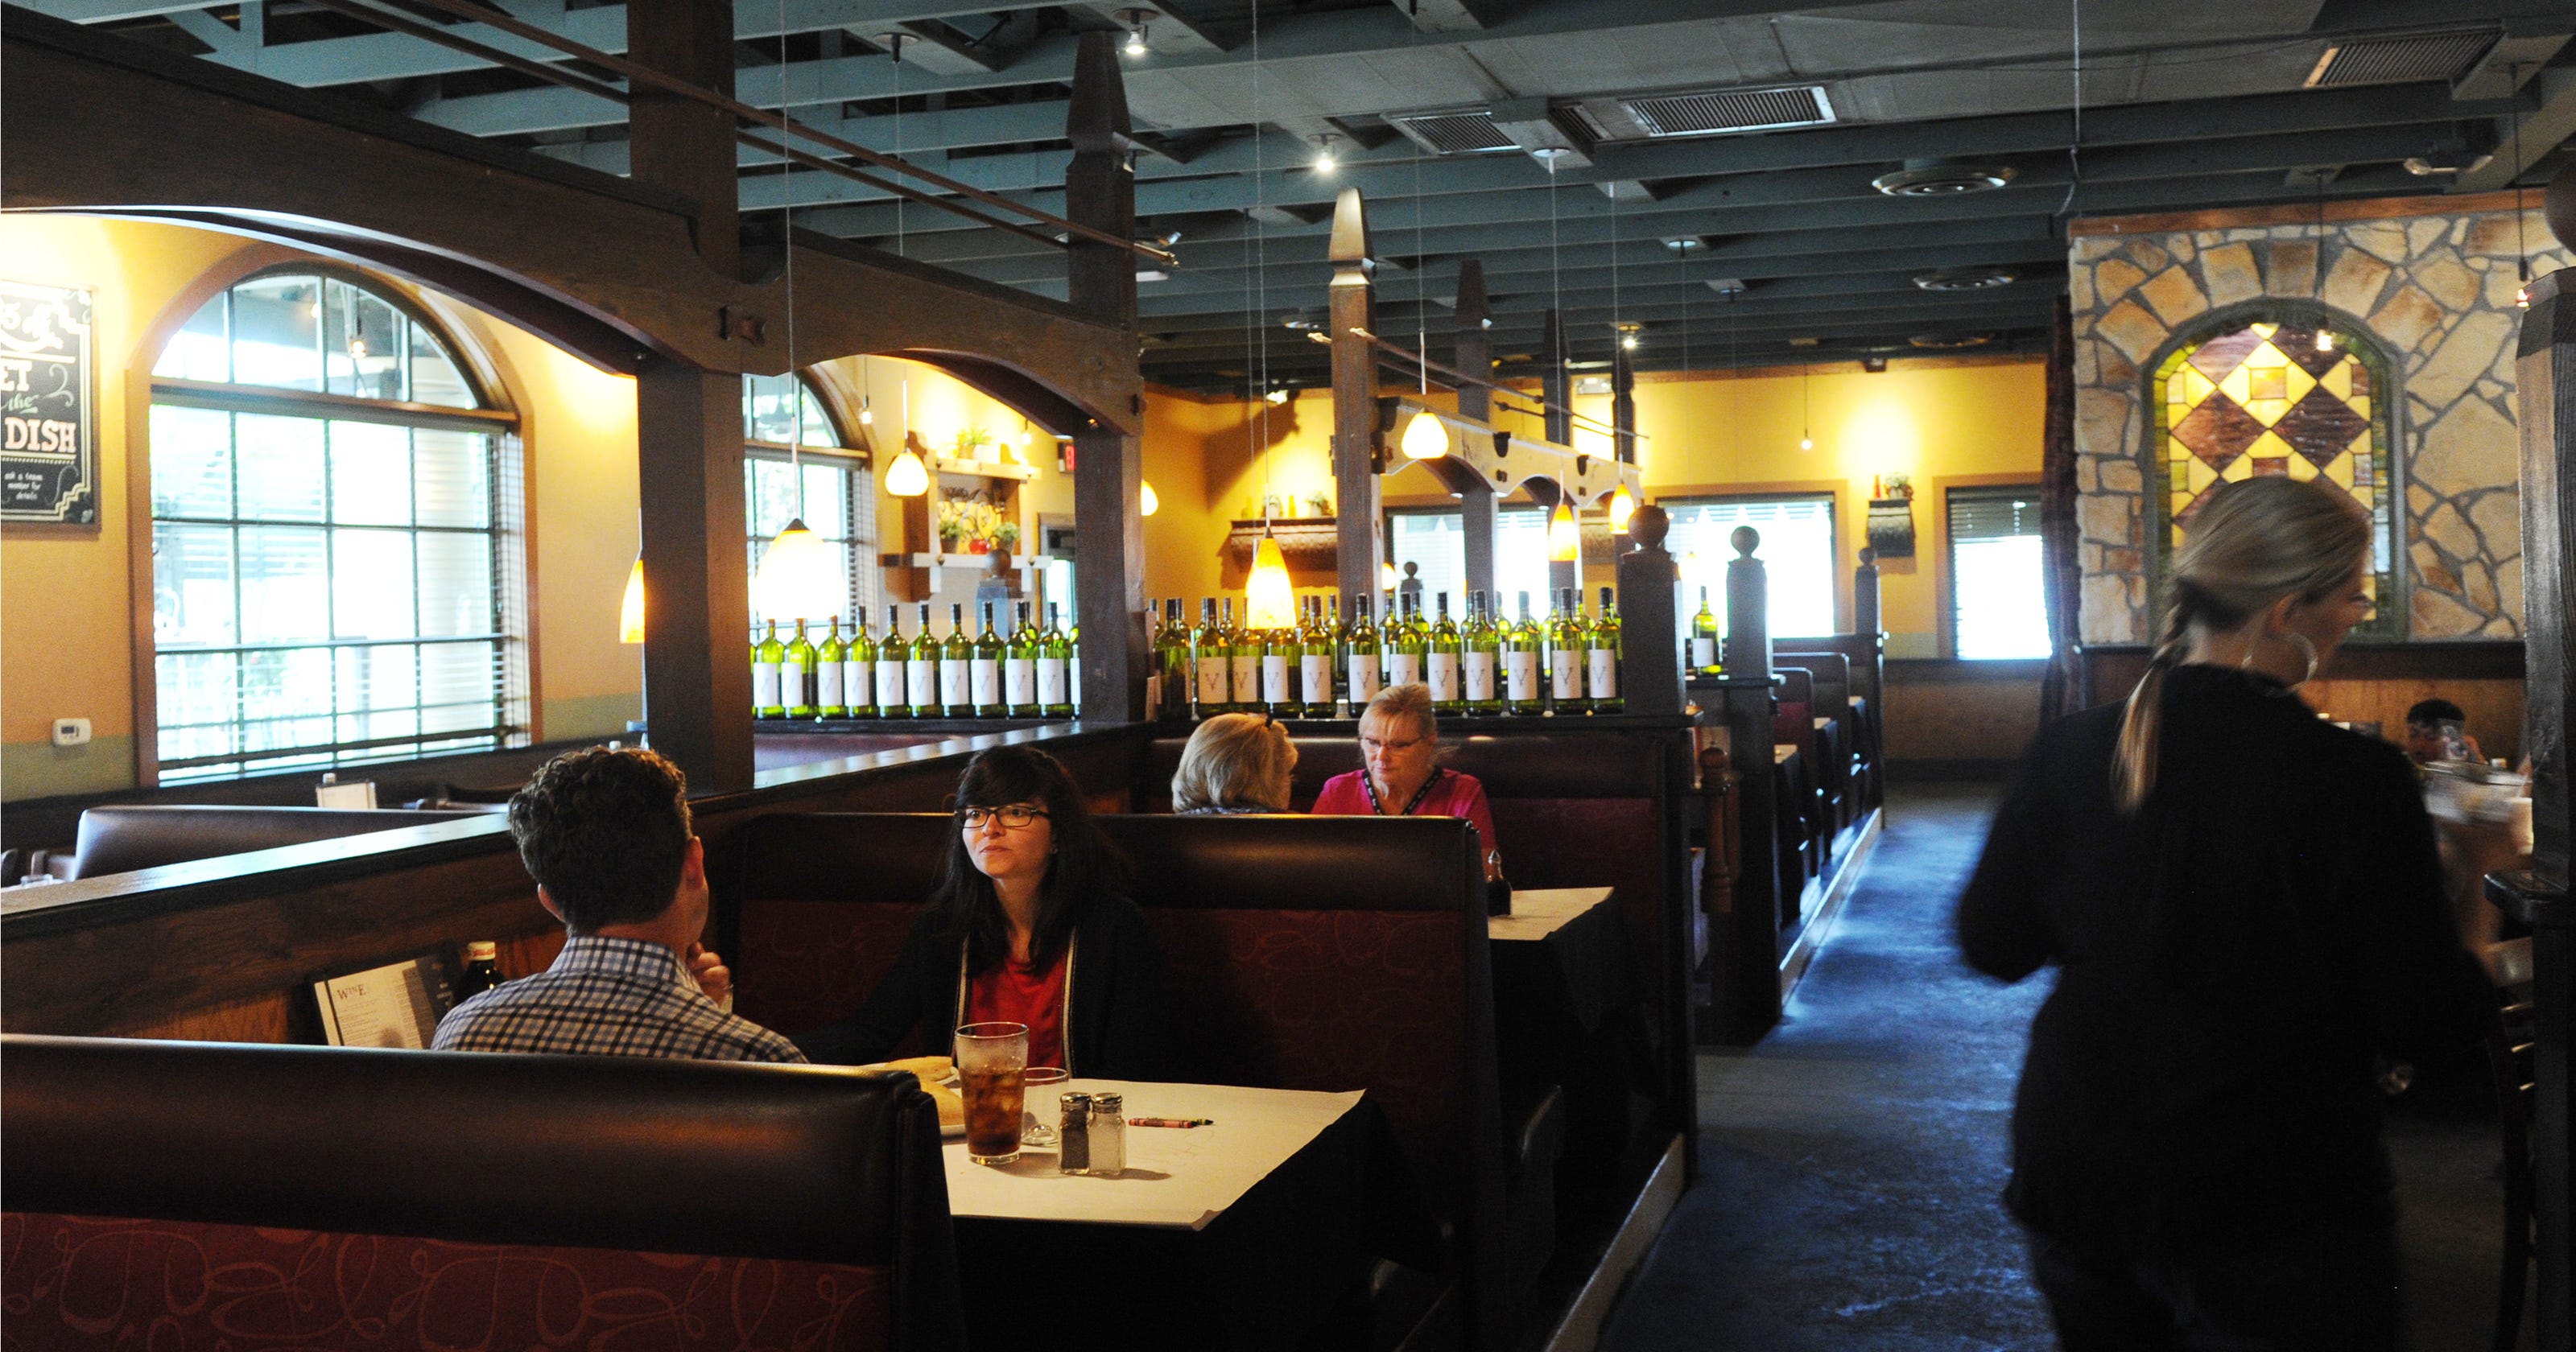 second helpings: recent ventura county restaurant reviews